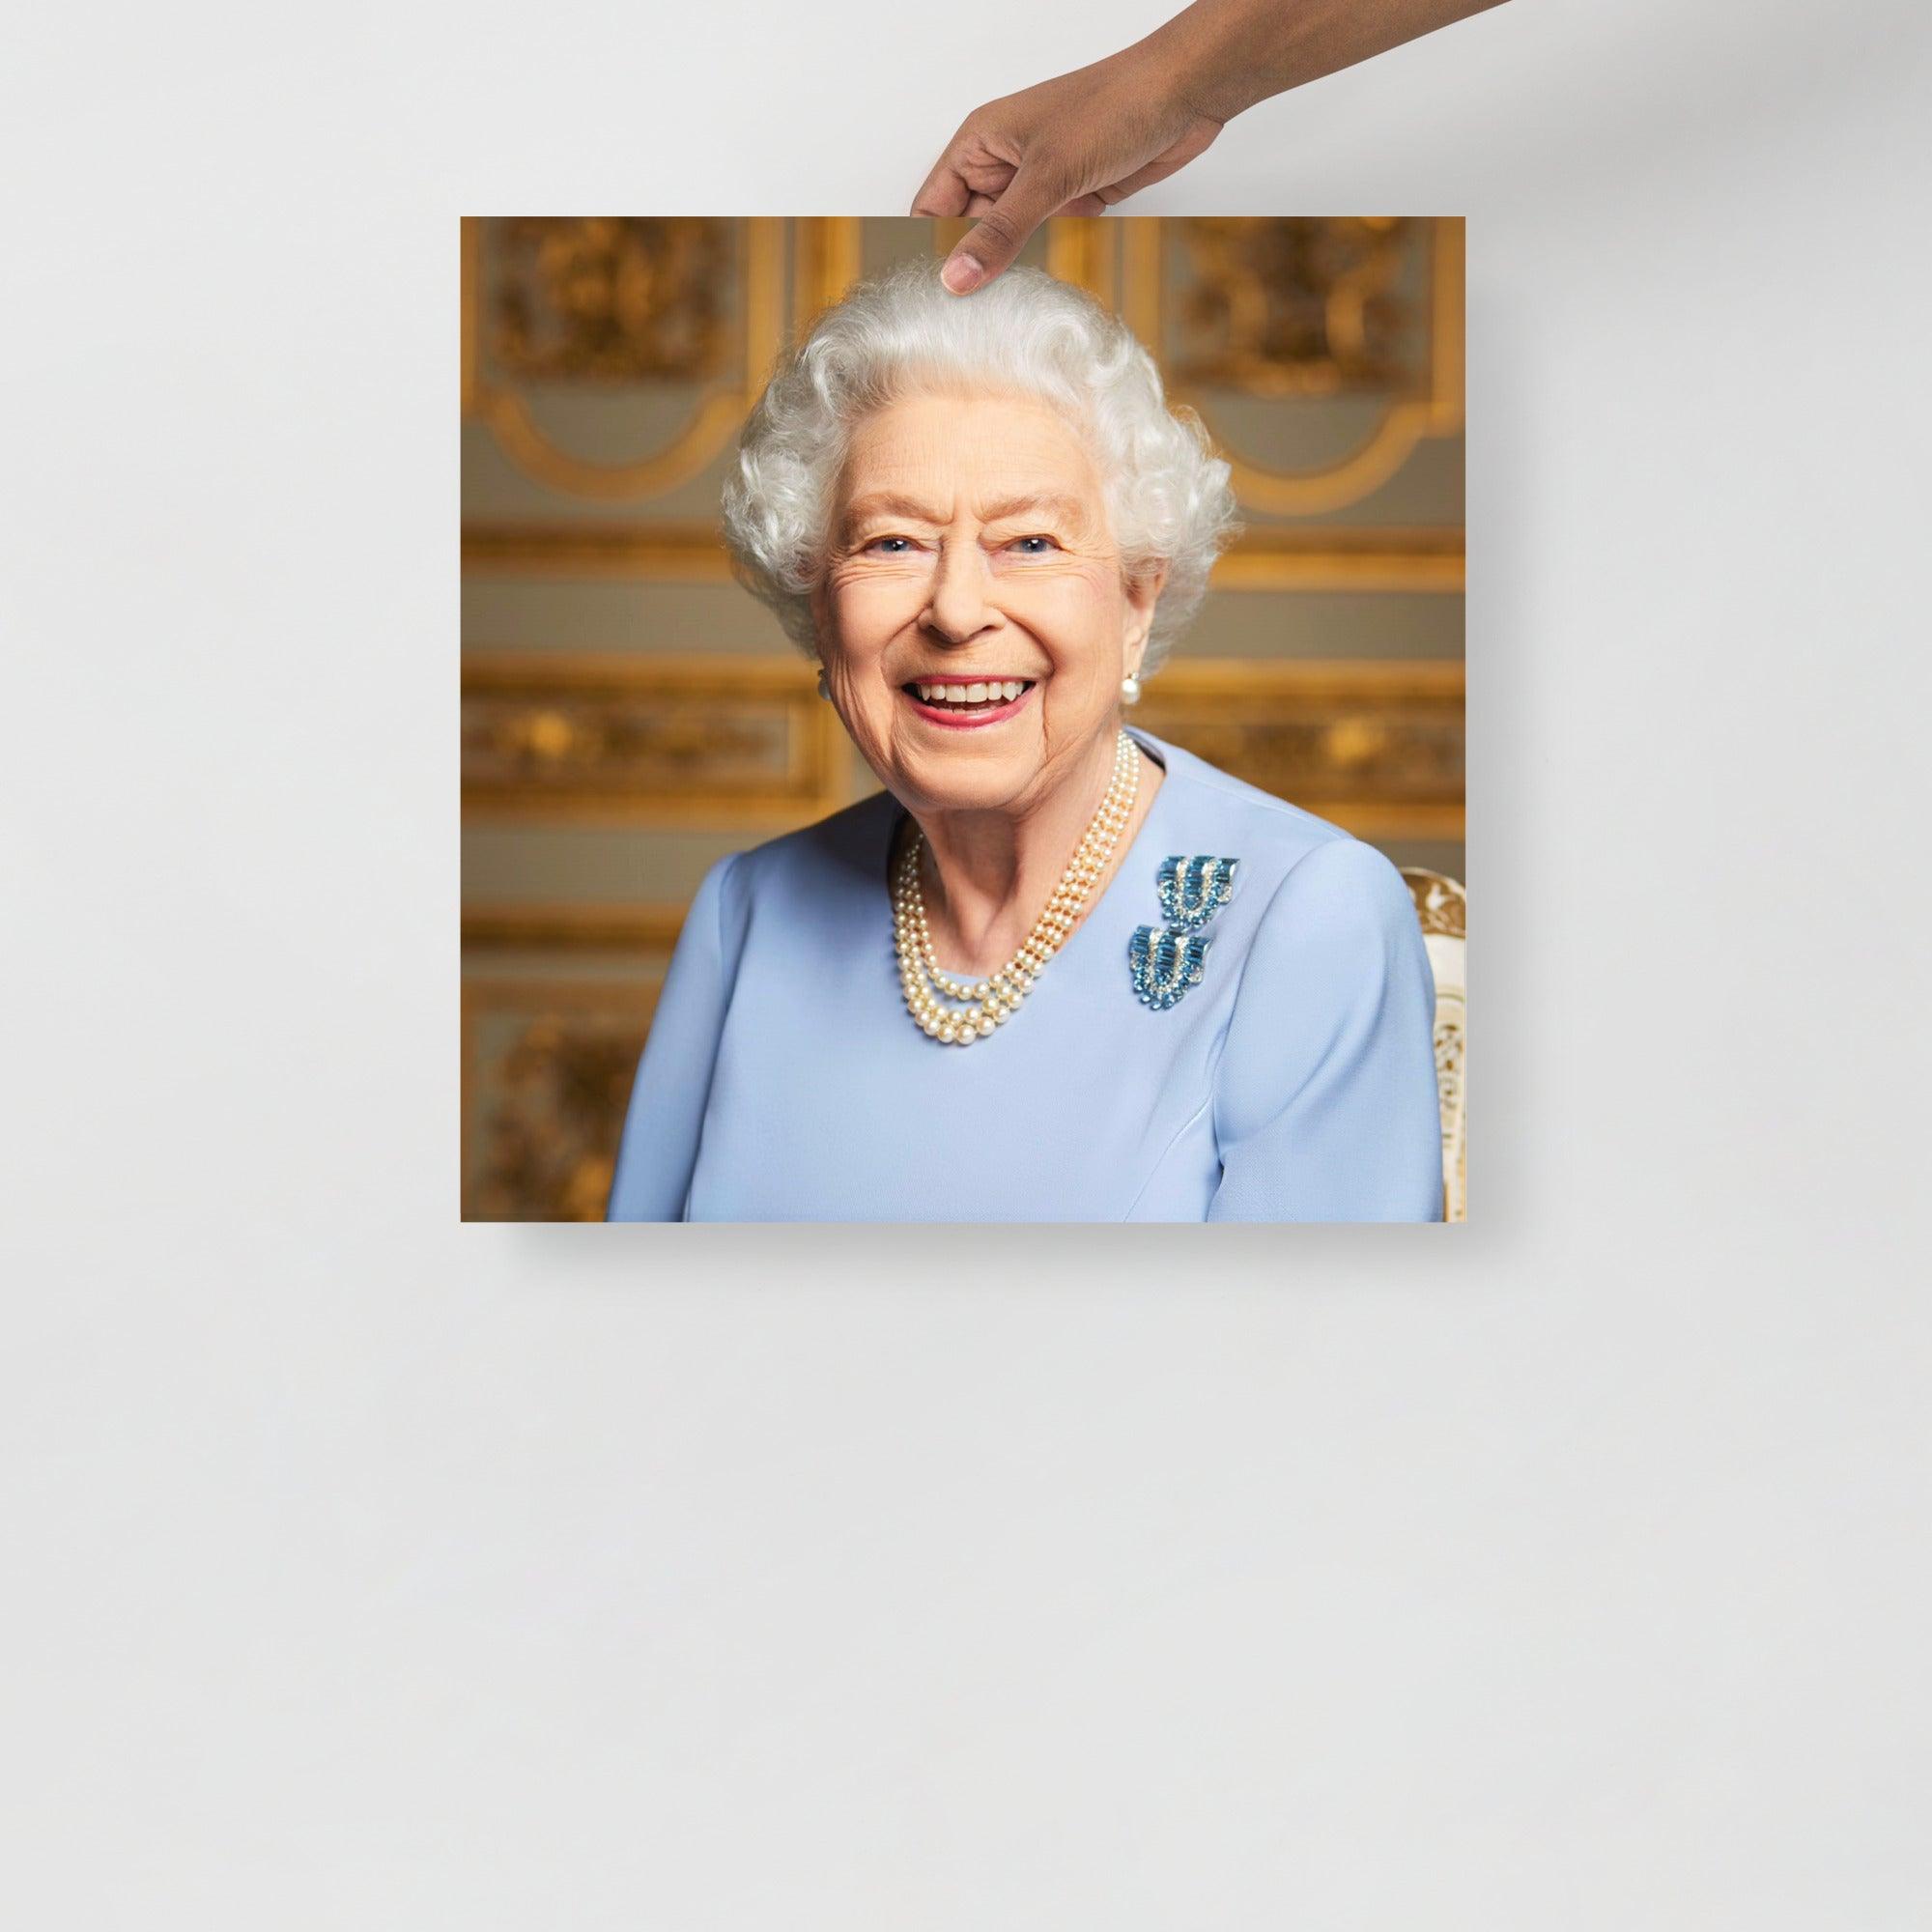 A Platinum Jubilee of Elizabeth II Official Portrait (Posthumous Release) poster on a plain backdrop in size 18x18”.